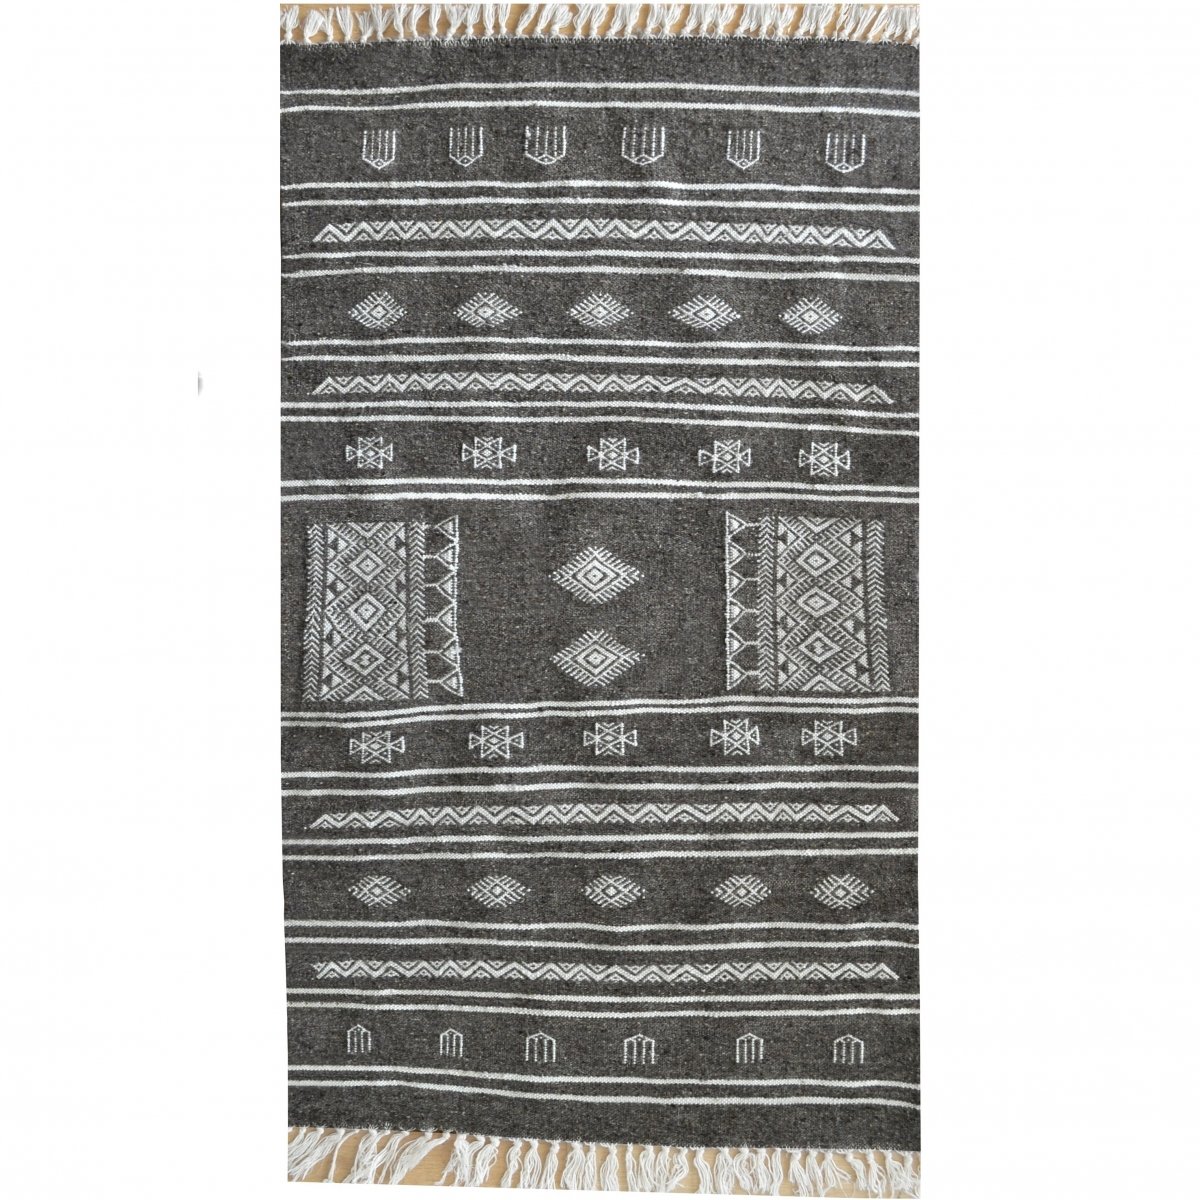 Berber tapijt Tapijt Kilim Mizza 65x115 Grijs/Wit (Handgeweven, Wol, Tunesië) Tunesisch kilimdeken, Marokkaanse stijl. Rechthoek